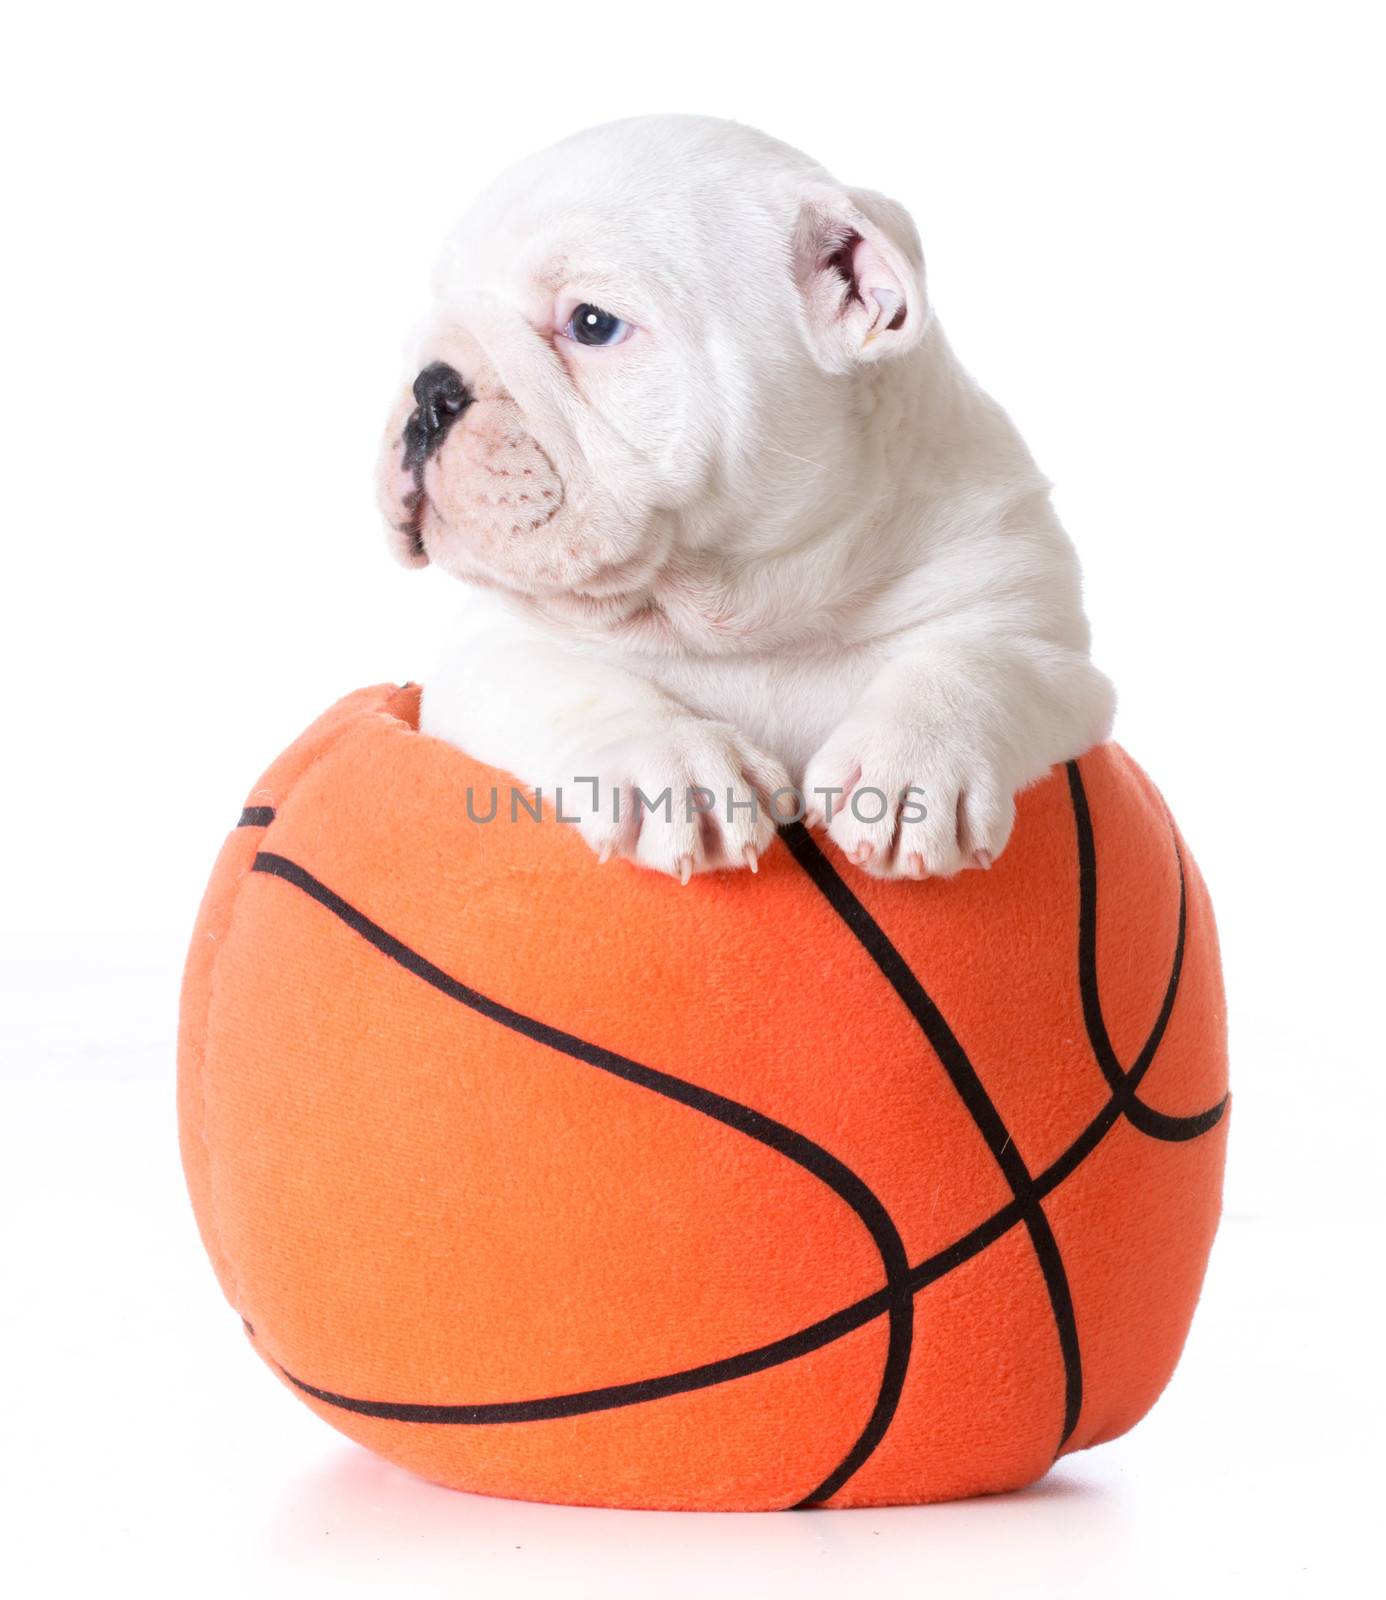 sports hound - bulldog puppy inside a stuffed basketball - 7 weeks old